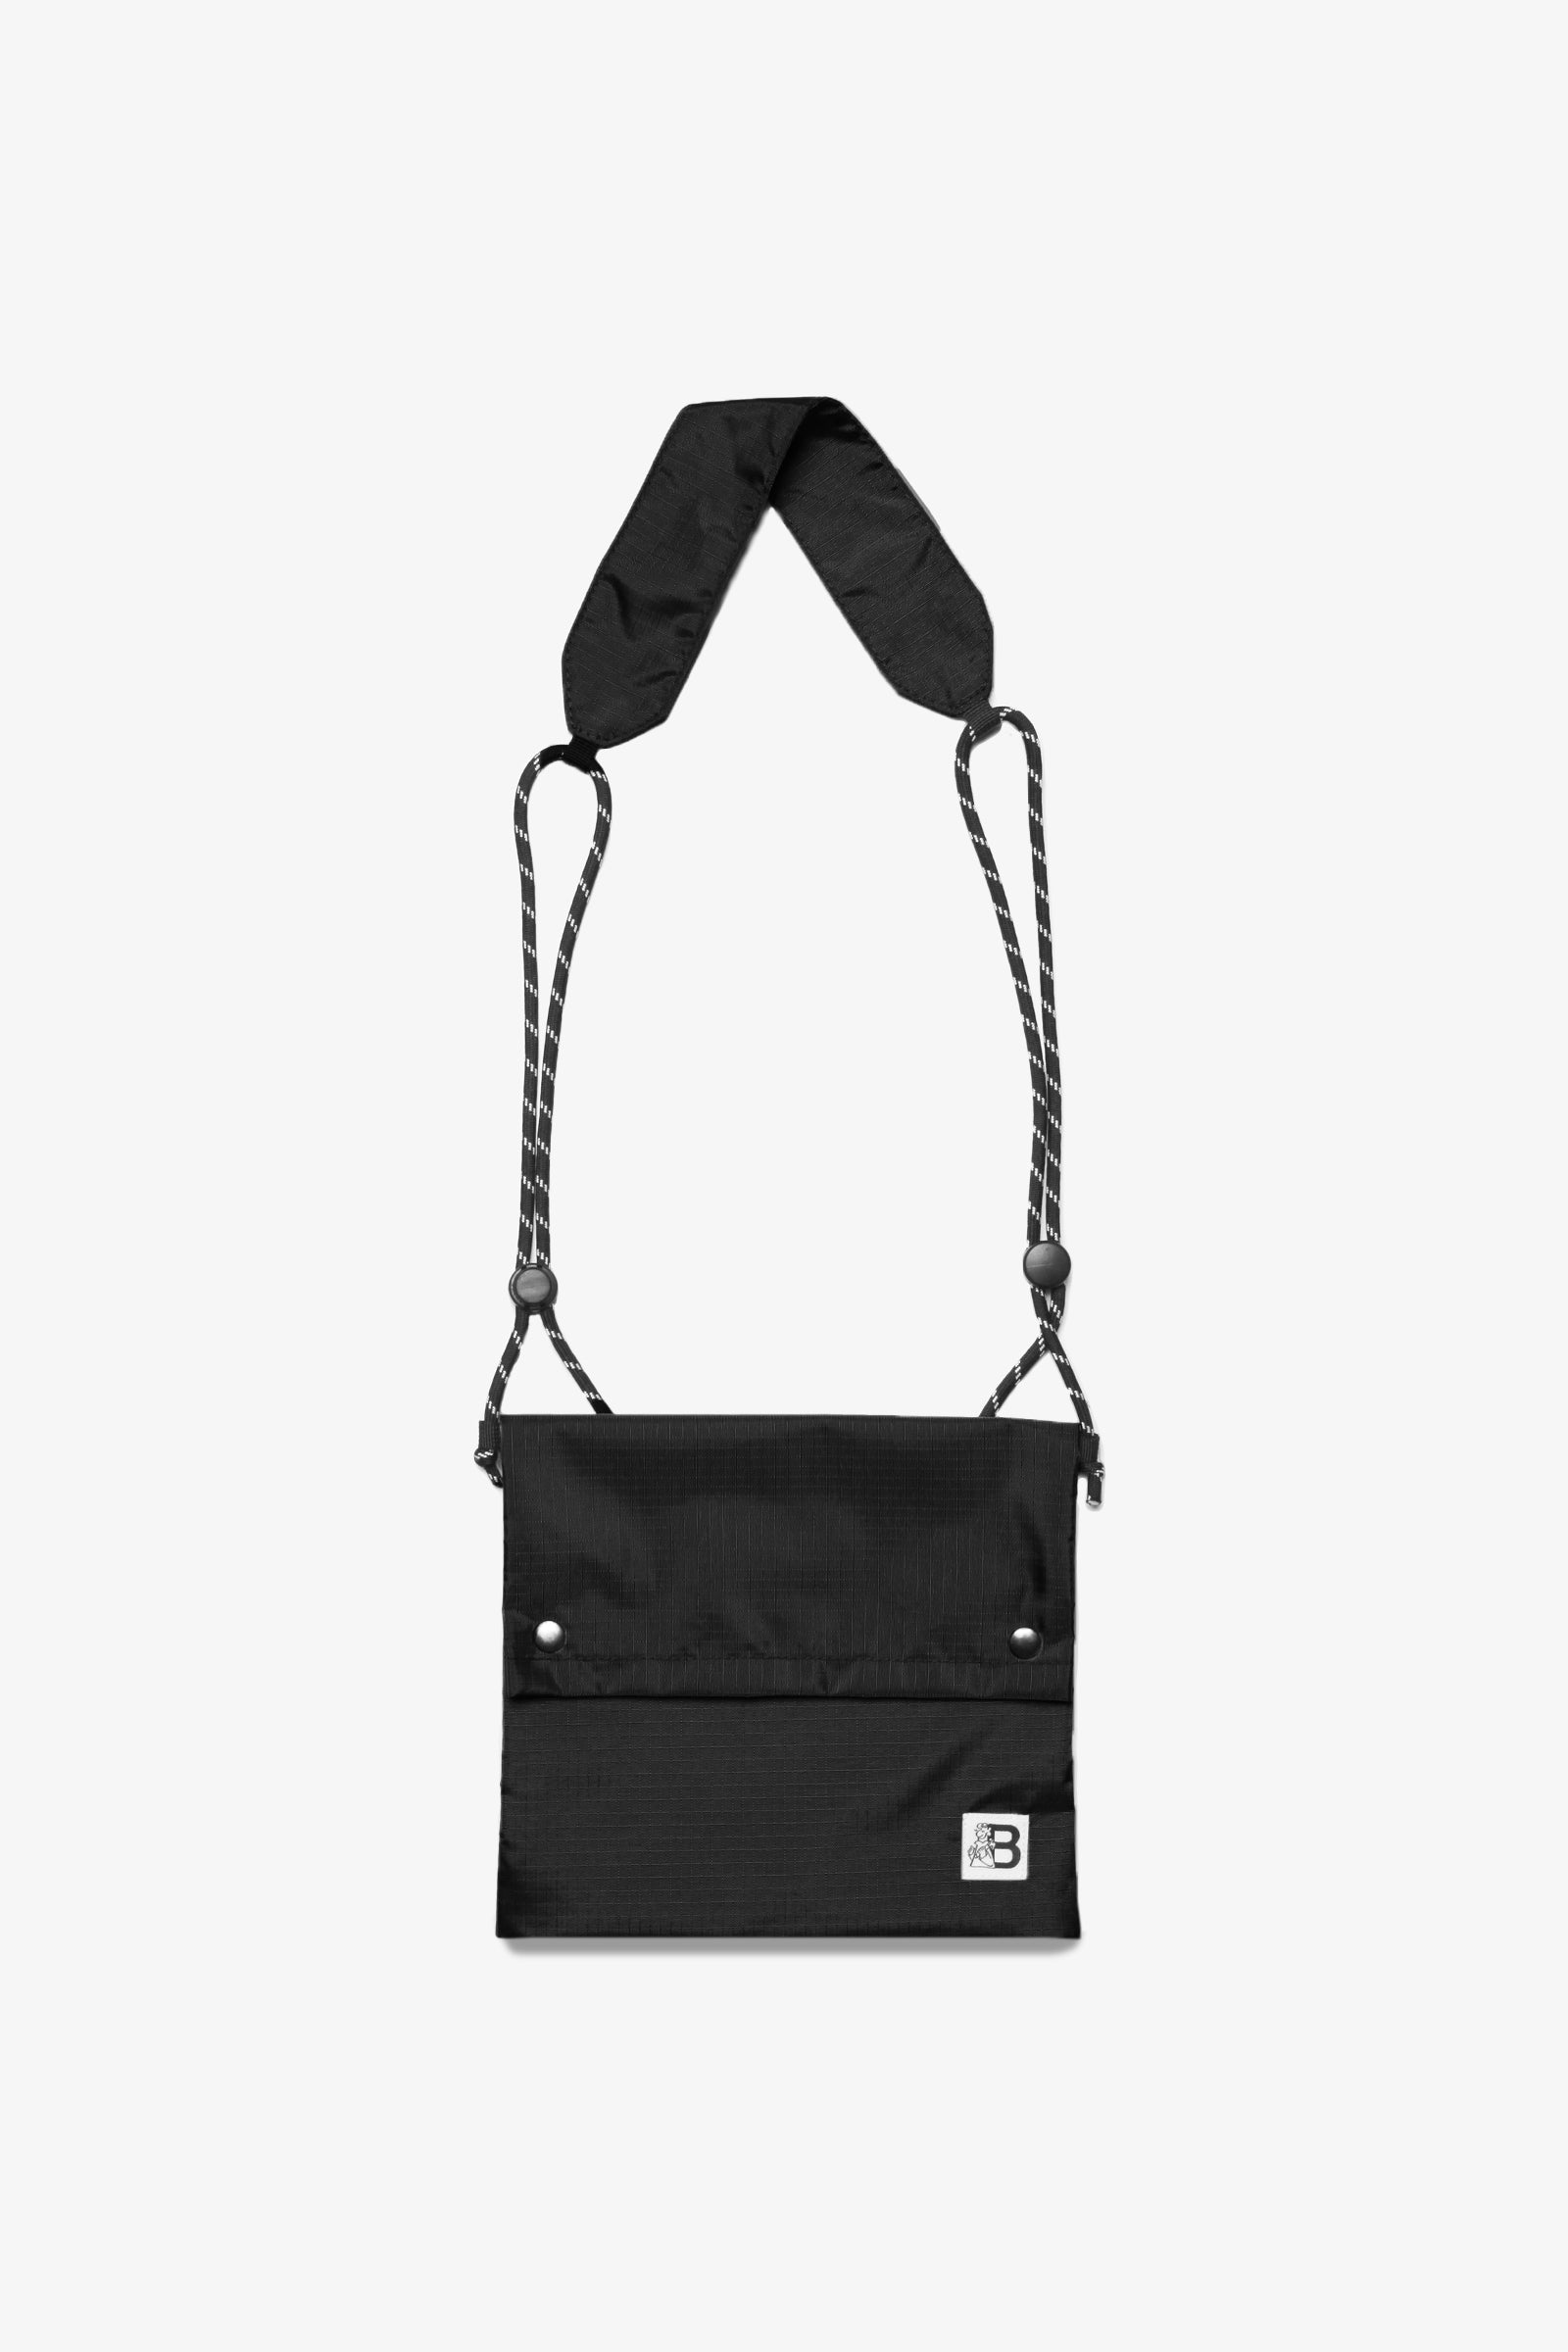 Blacksmith - Ripstop Sacoche Bag - Black